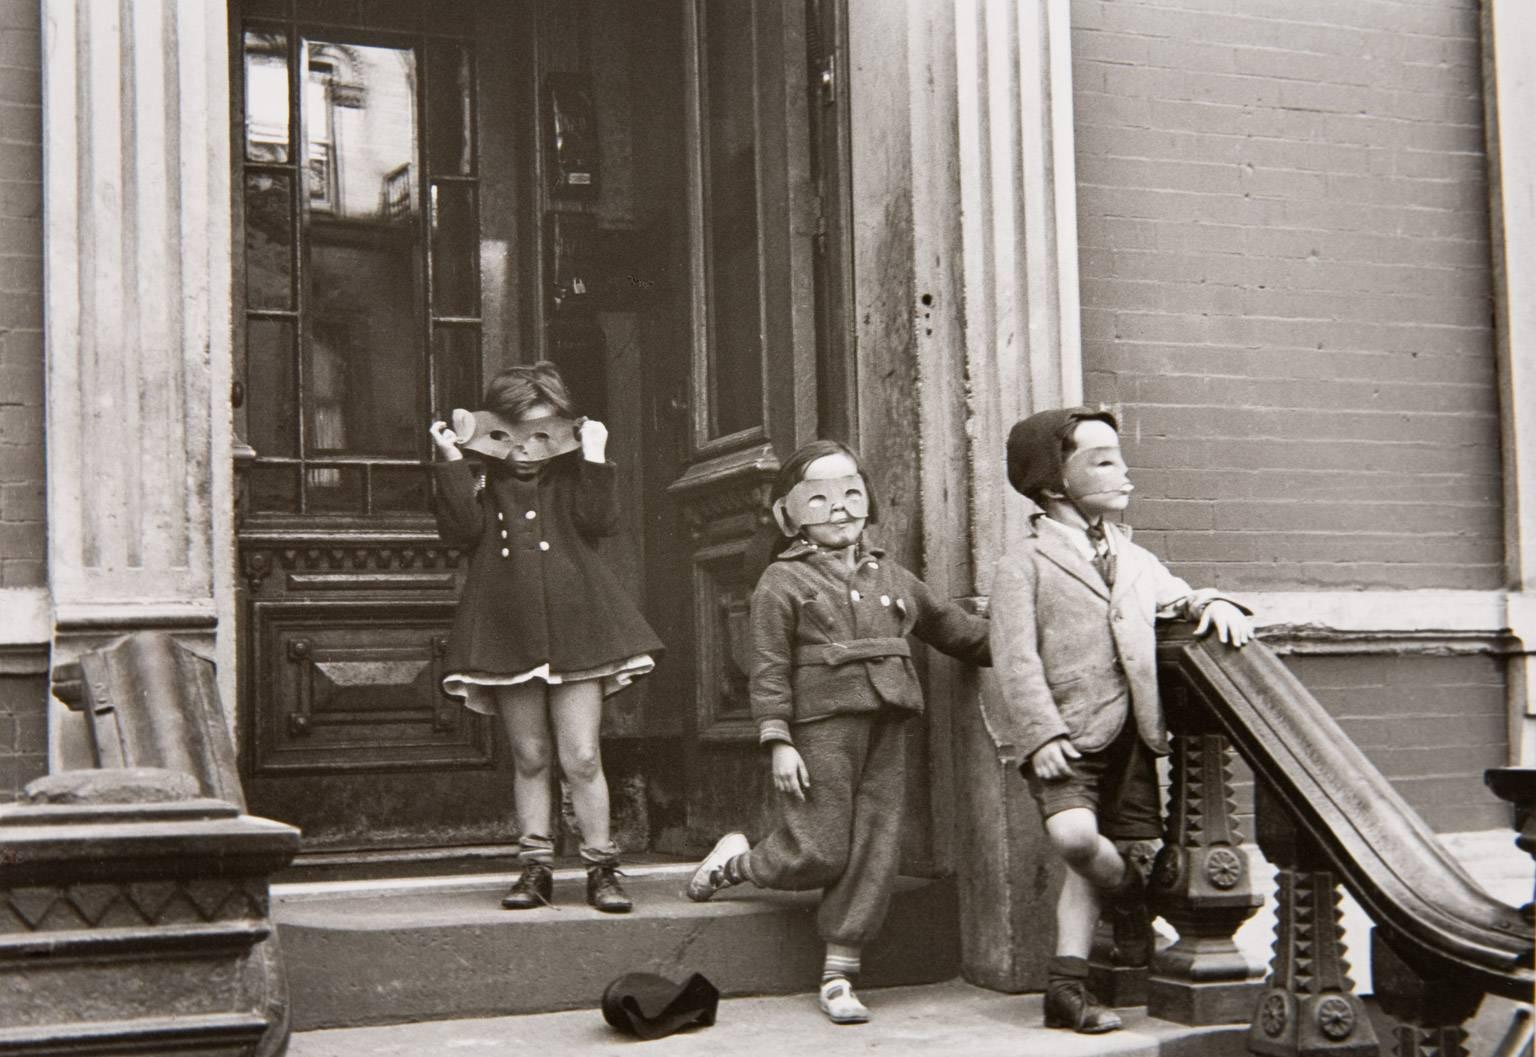 Helen Levitt Black and White Photograph - Children with Masks